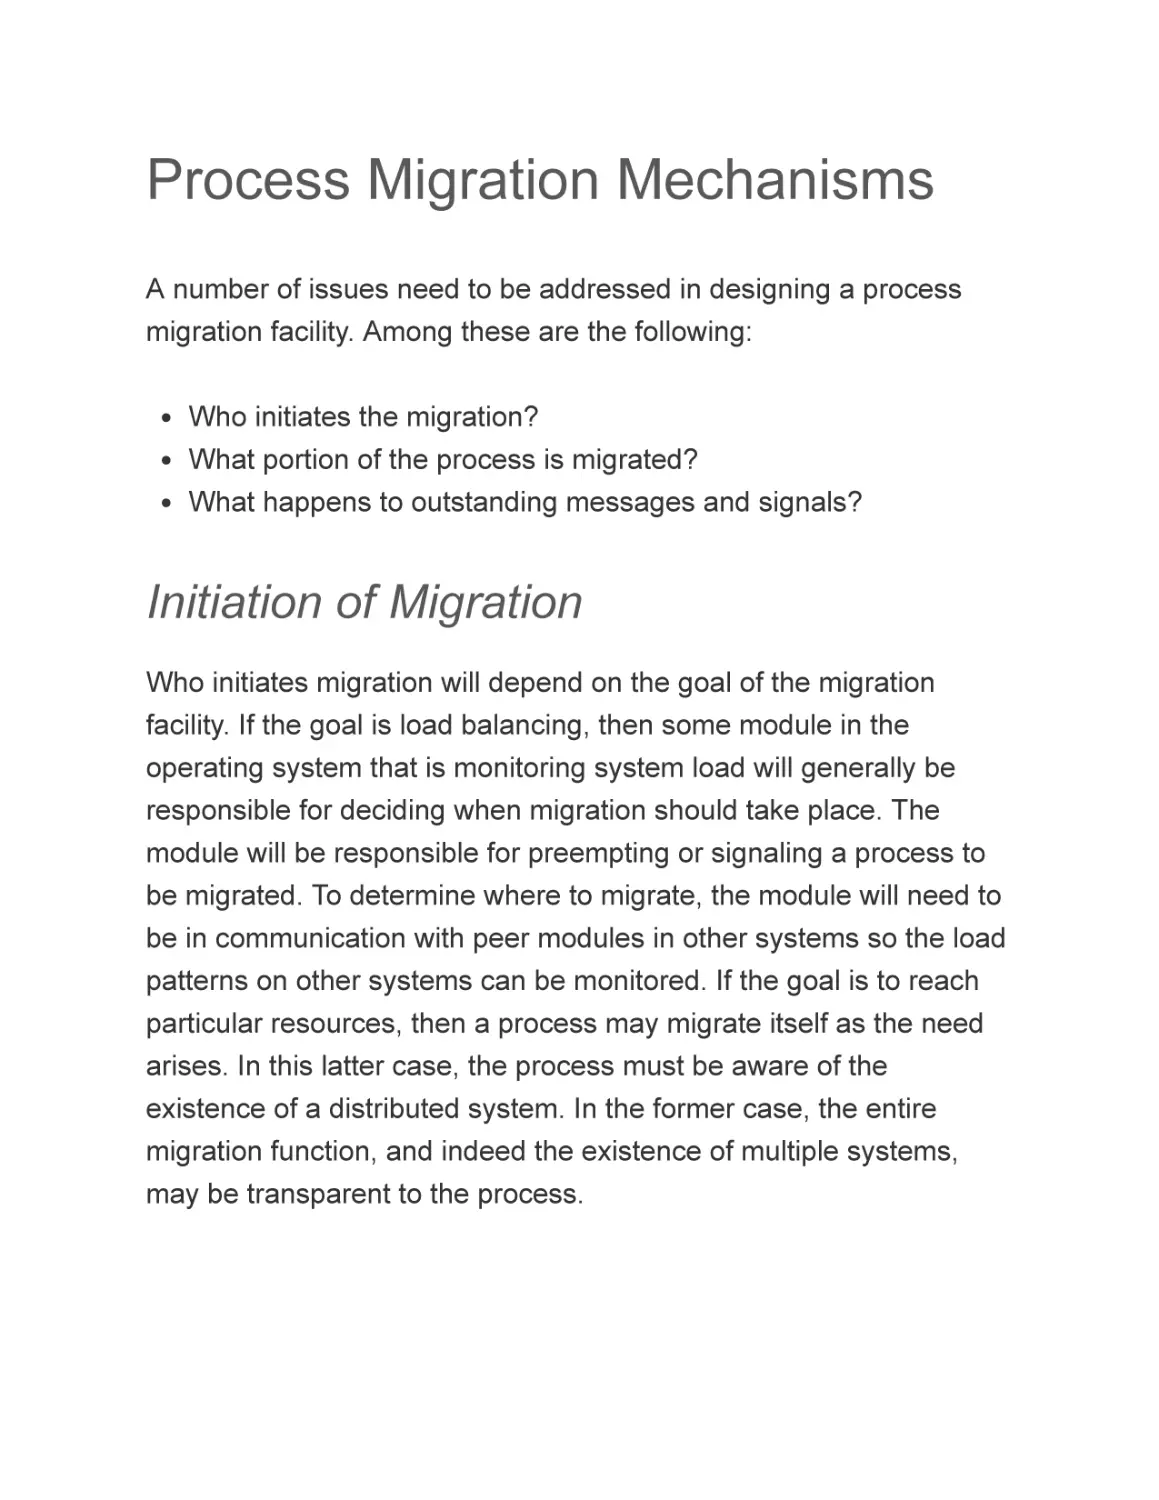 Process Migration Mechanisms
Initiation of Migration